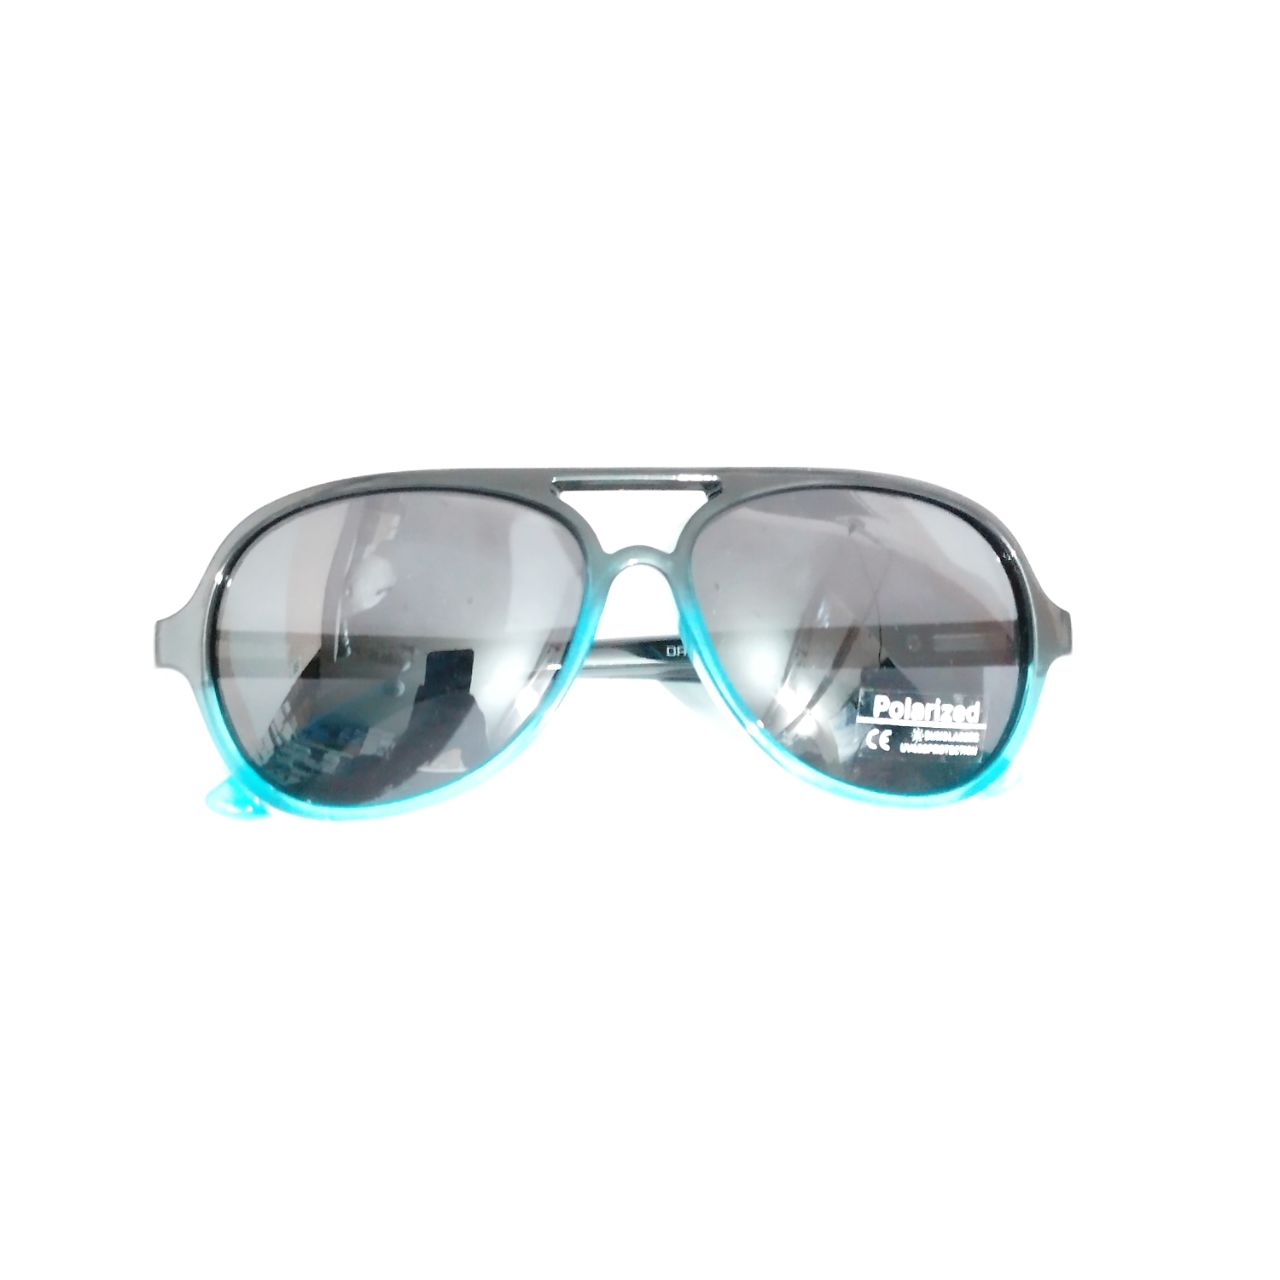 Black Blue Classic Pilot Shape Polarized Sunglasses for Men and Women